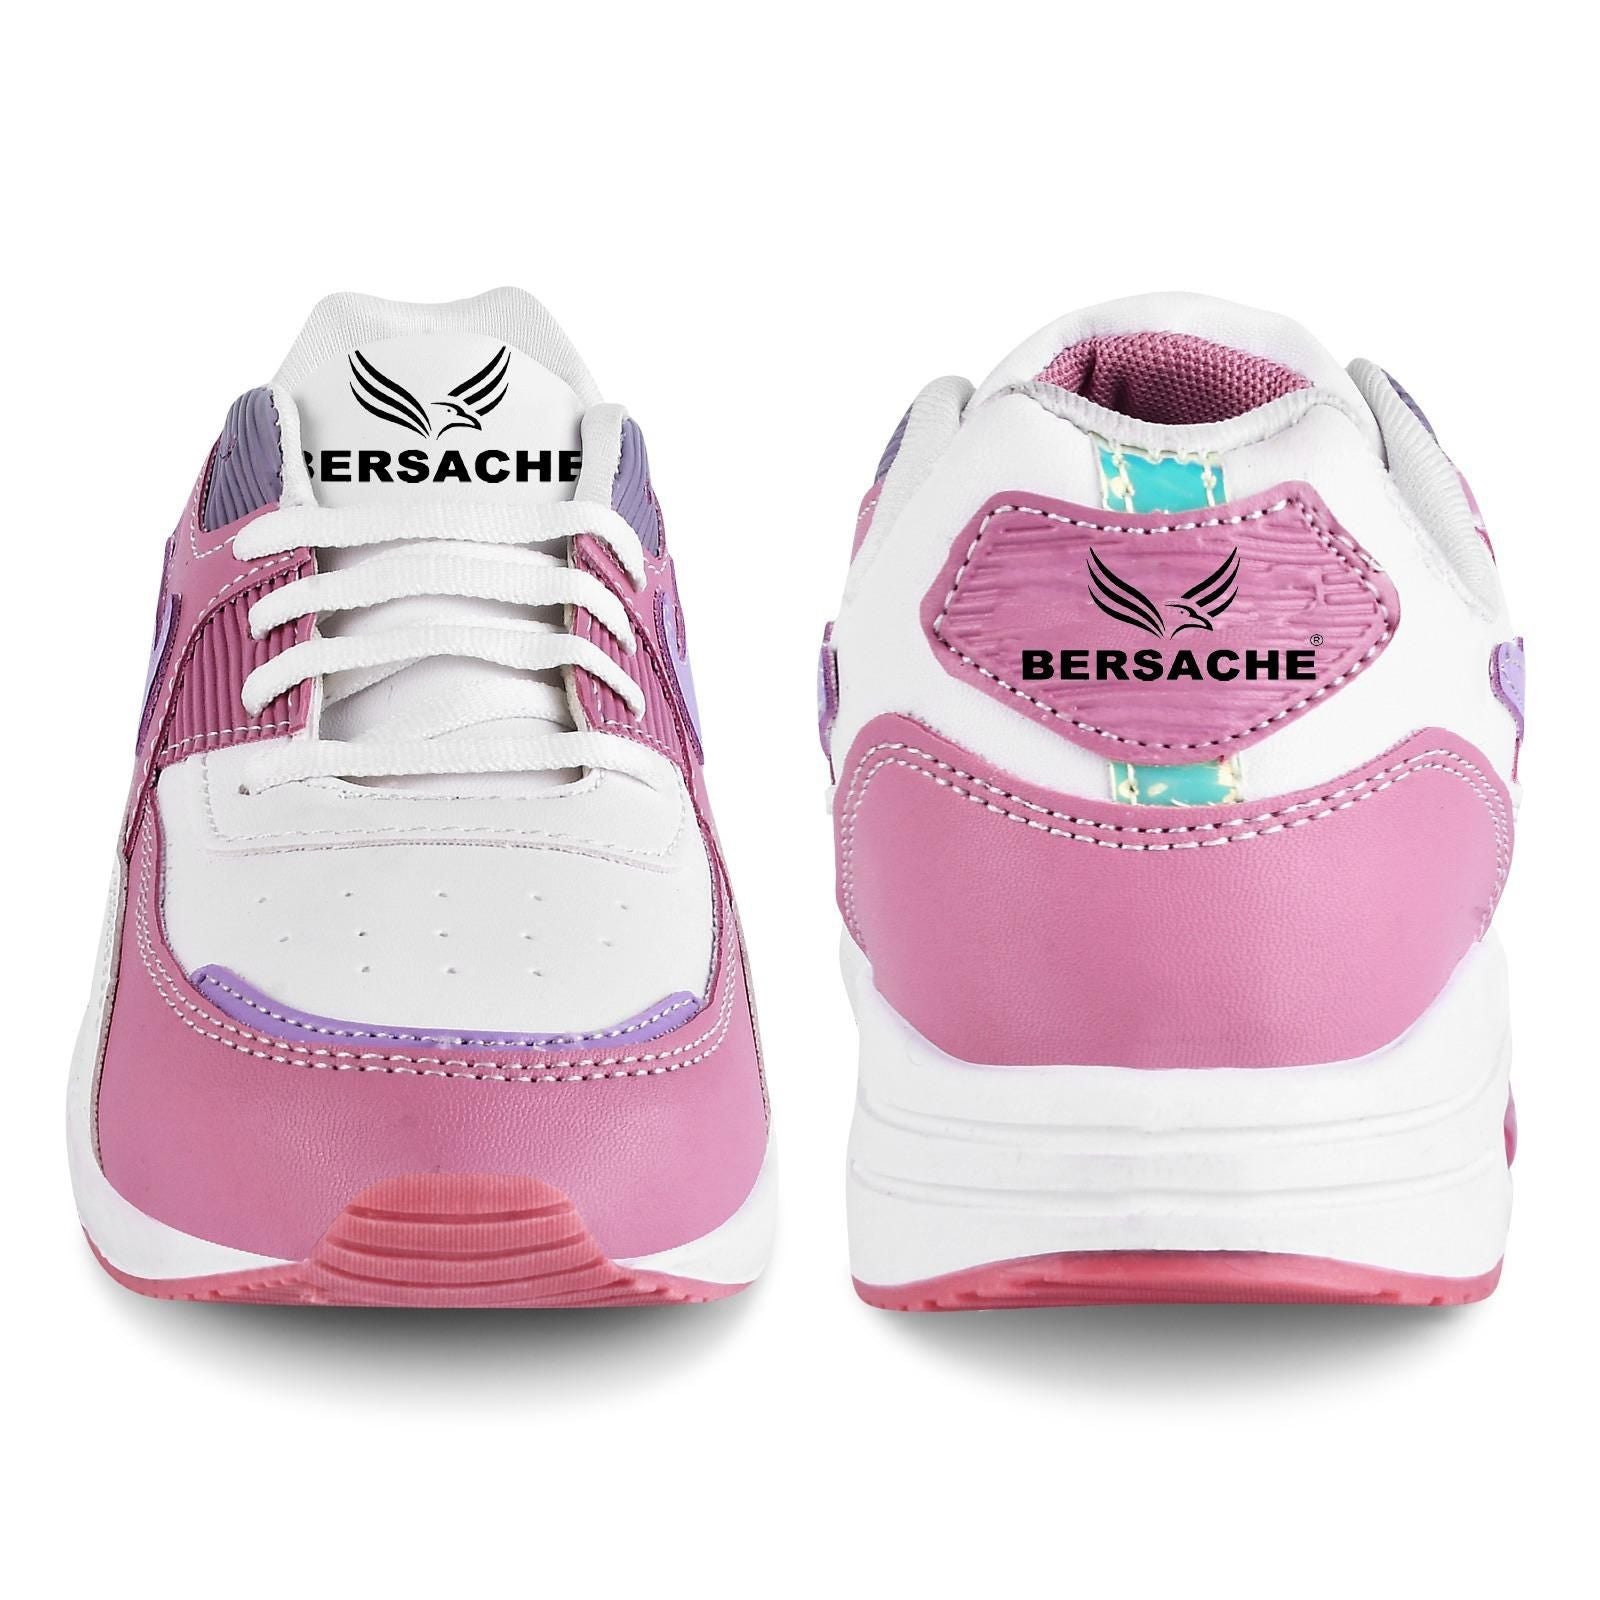 Bersache Lightweight Sports Walking Shoes For Women